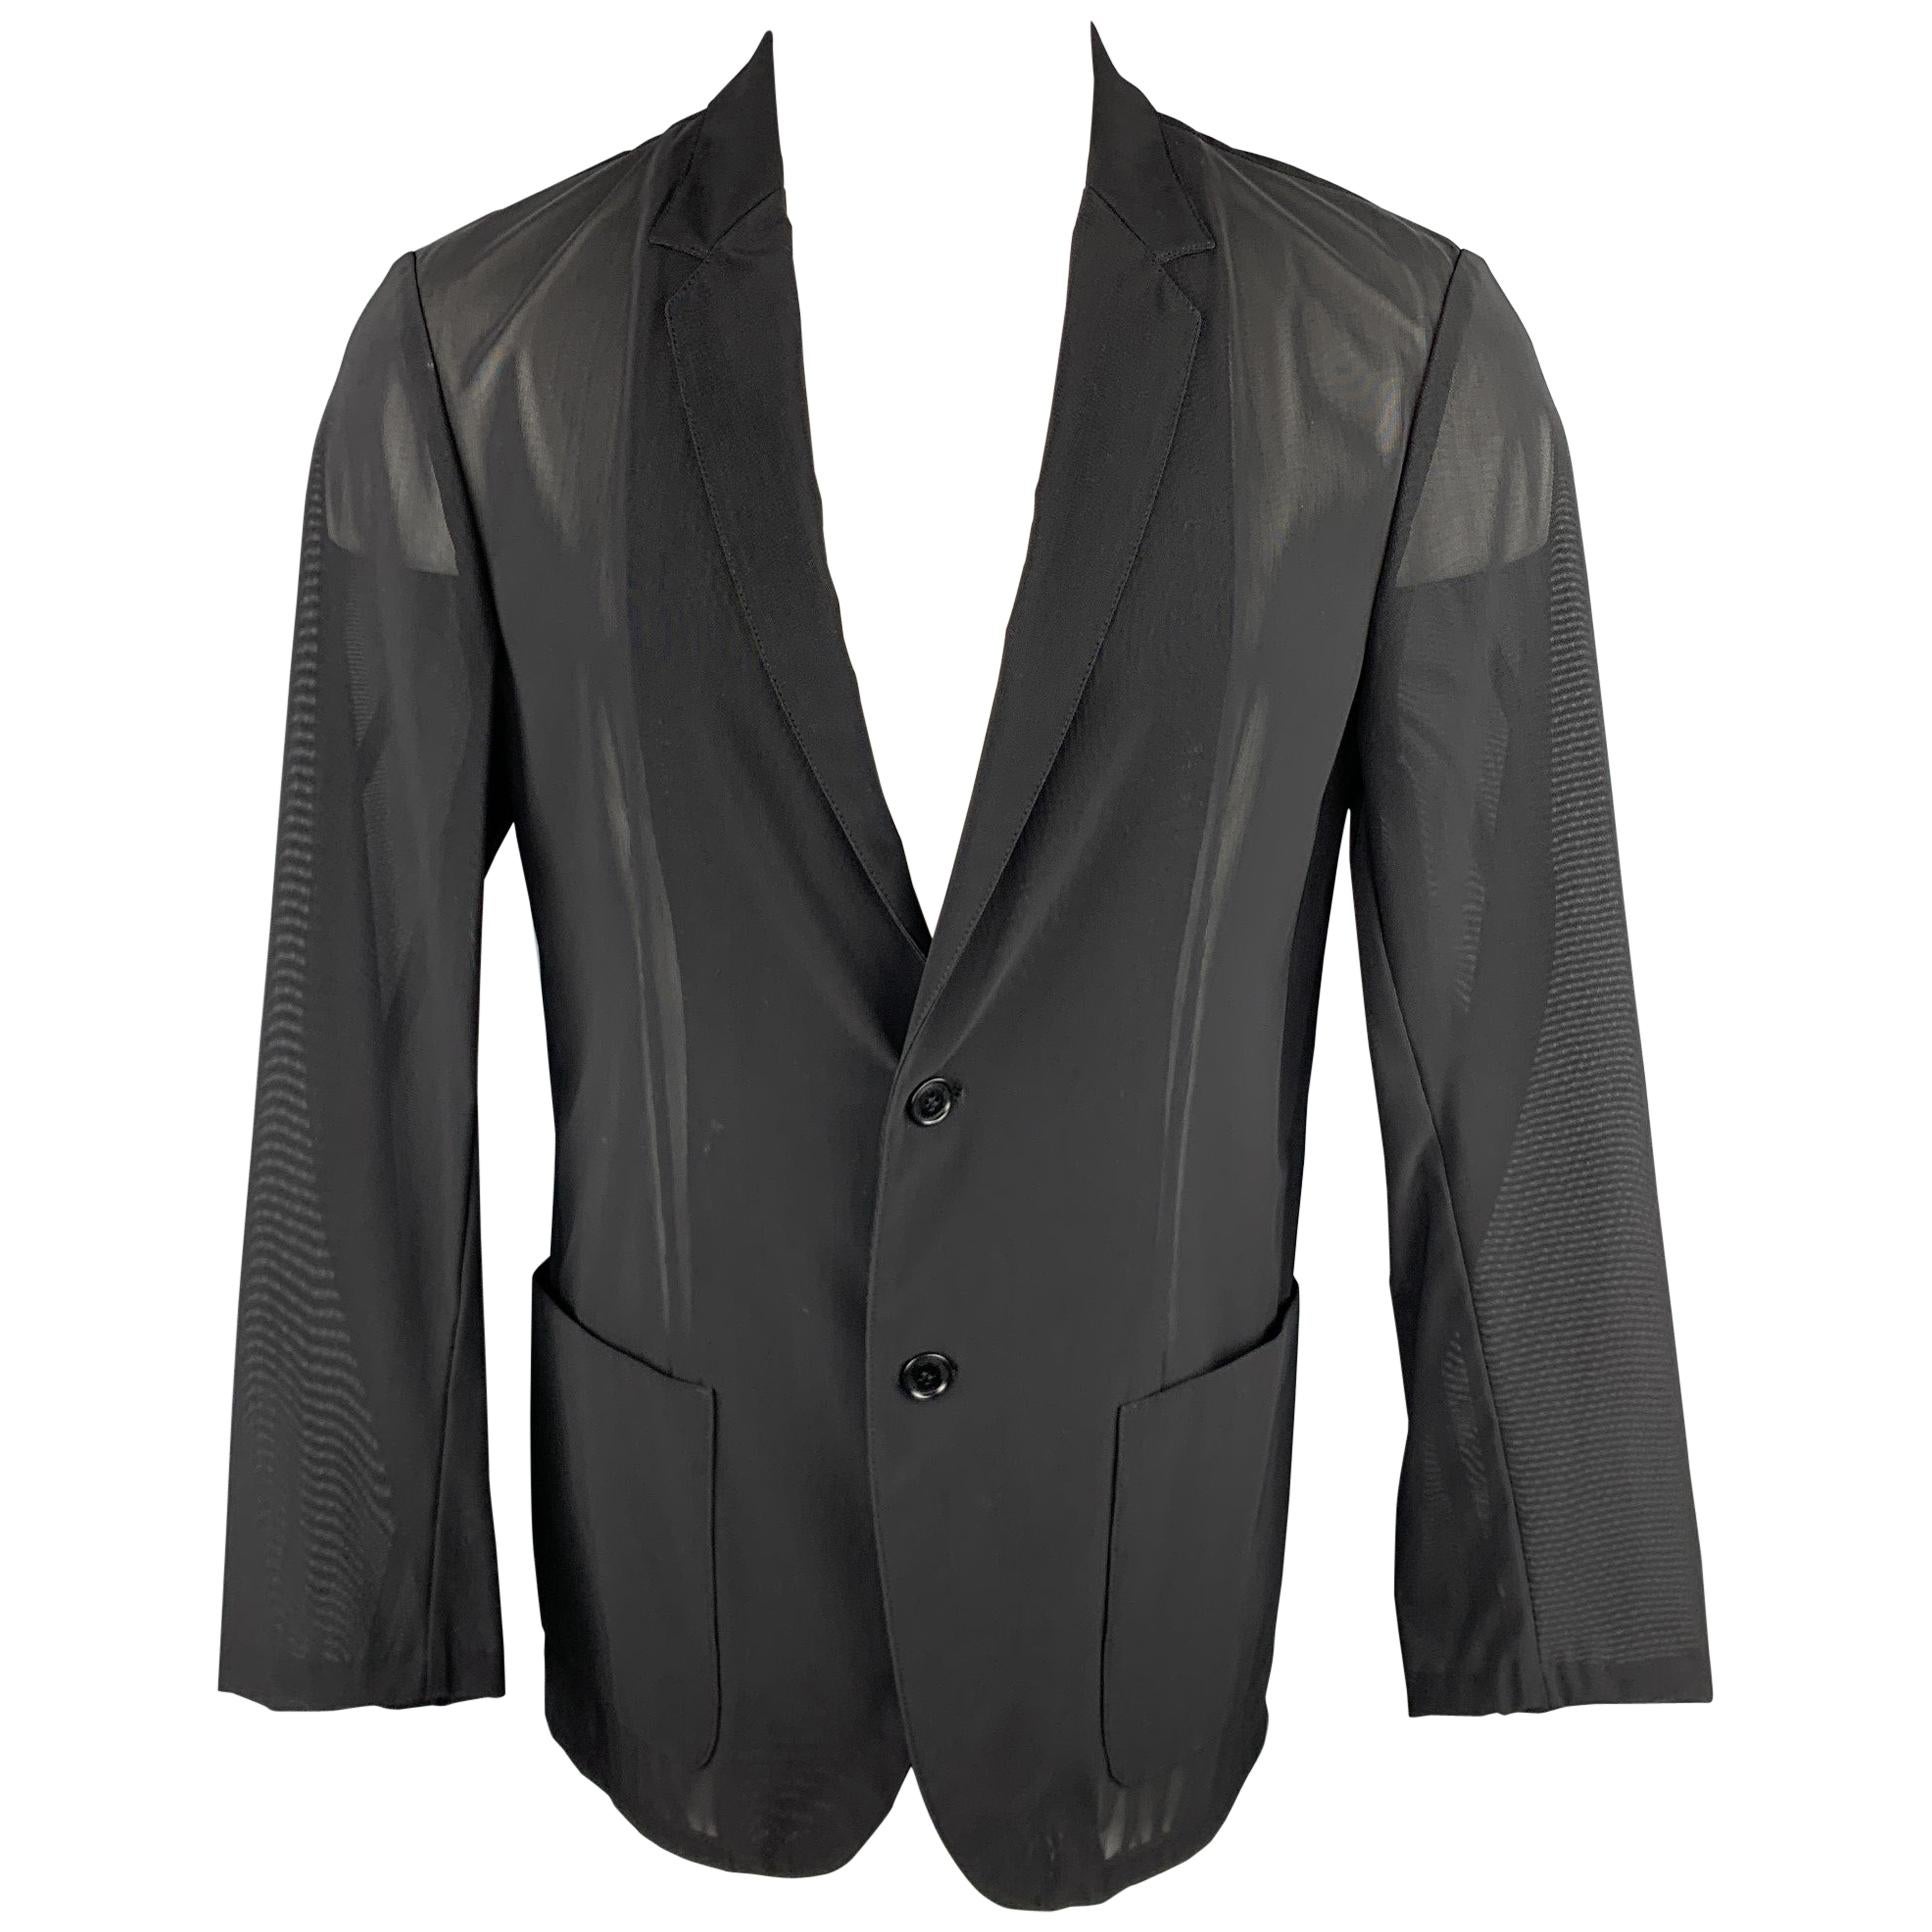 CALVIN KLEIN COLLECTION Size 40 Black See Through Mesh Sport Coat